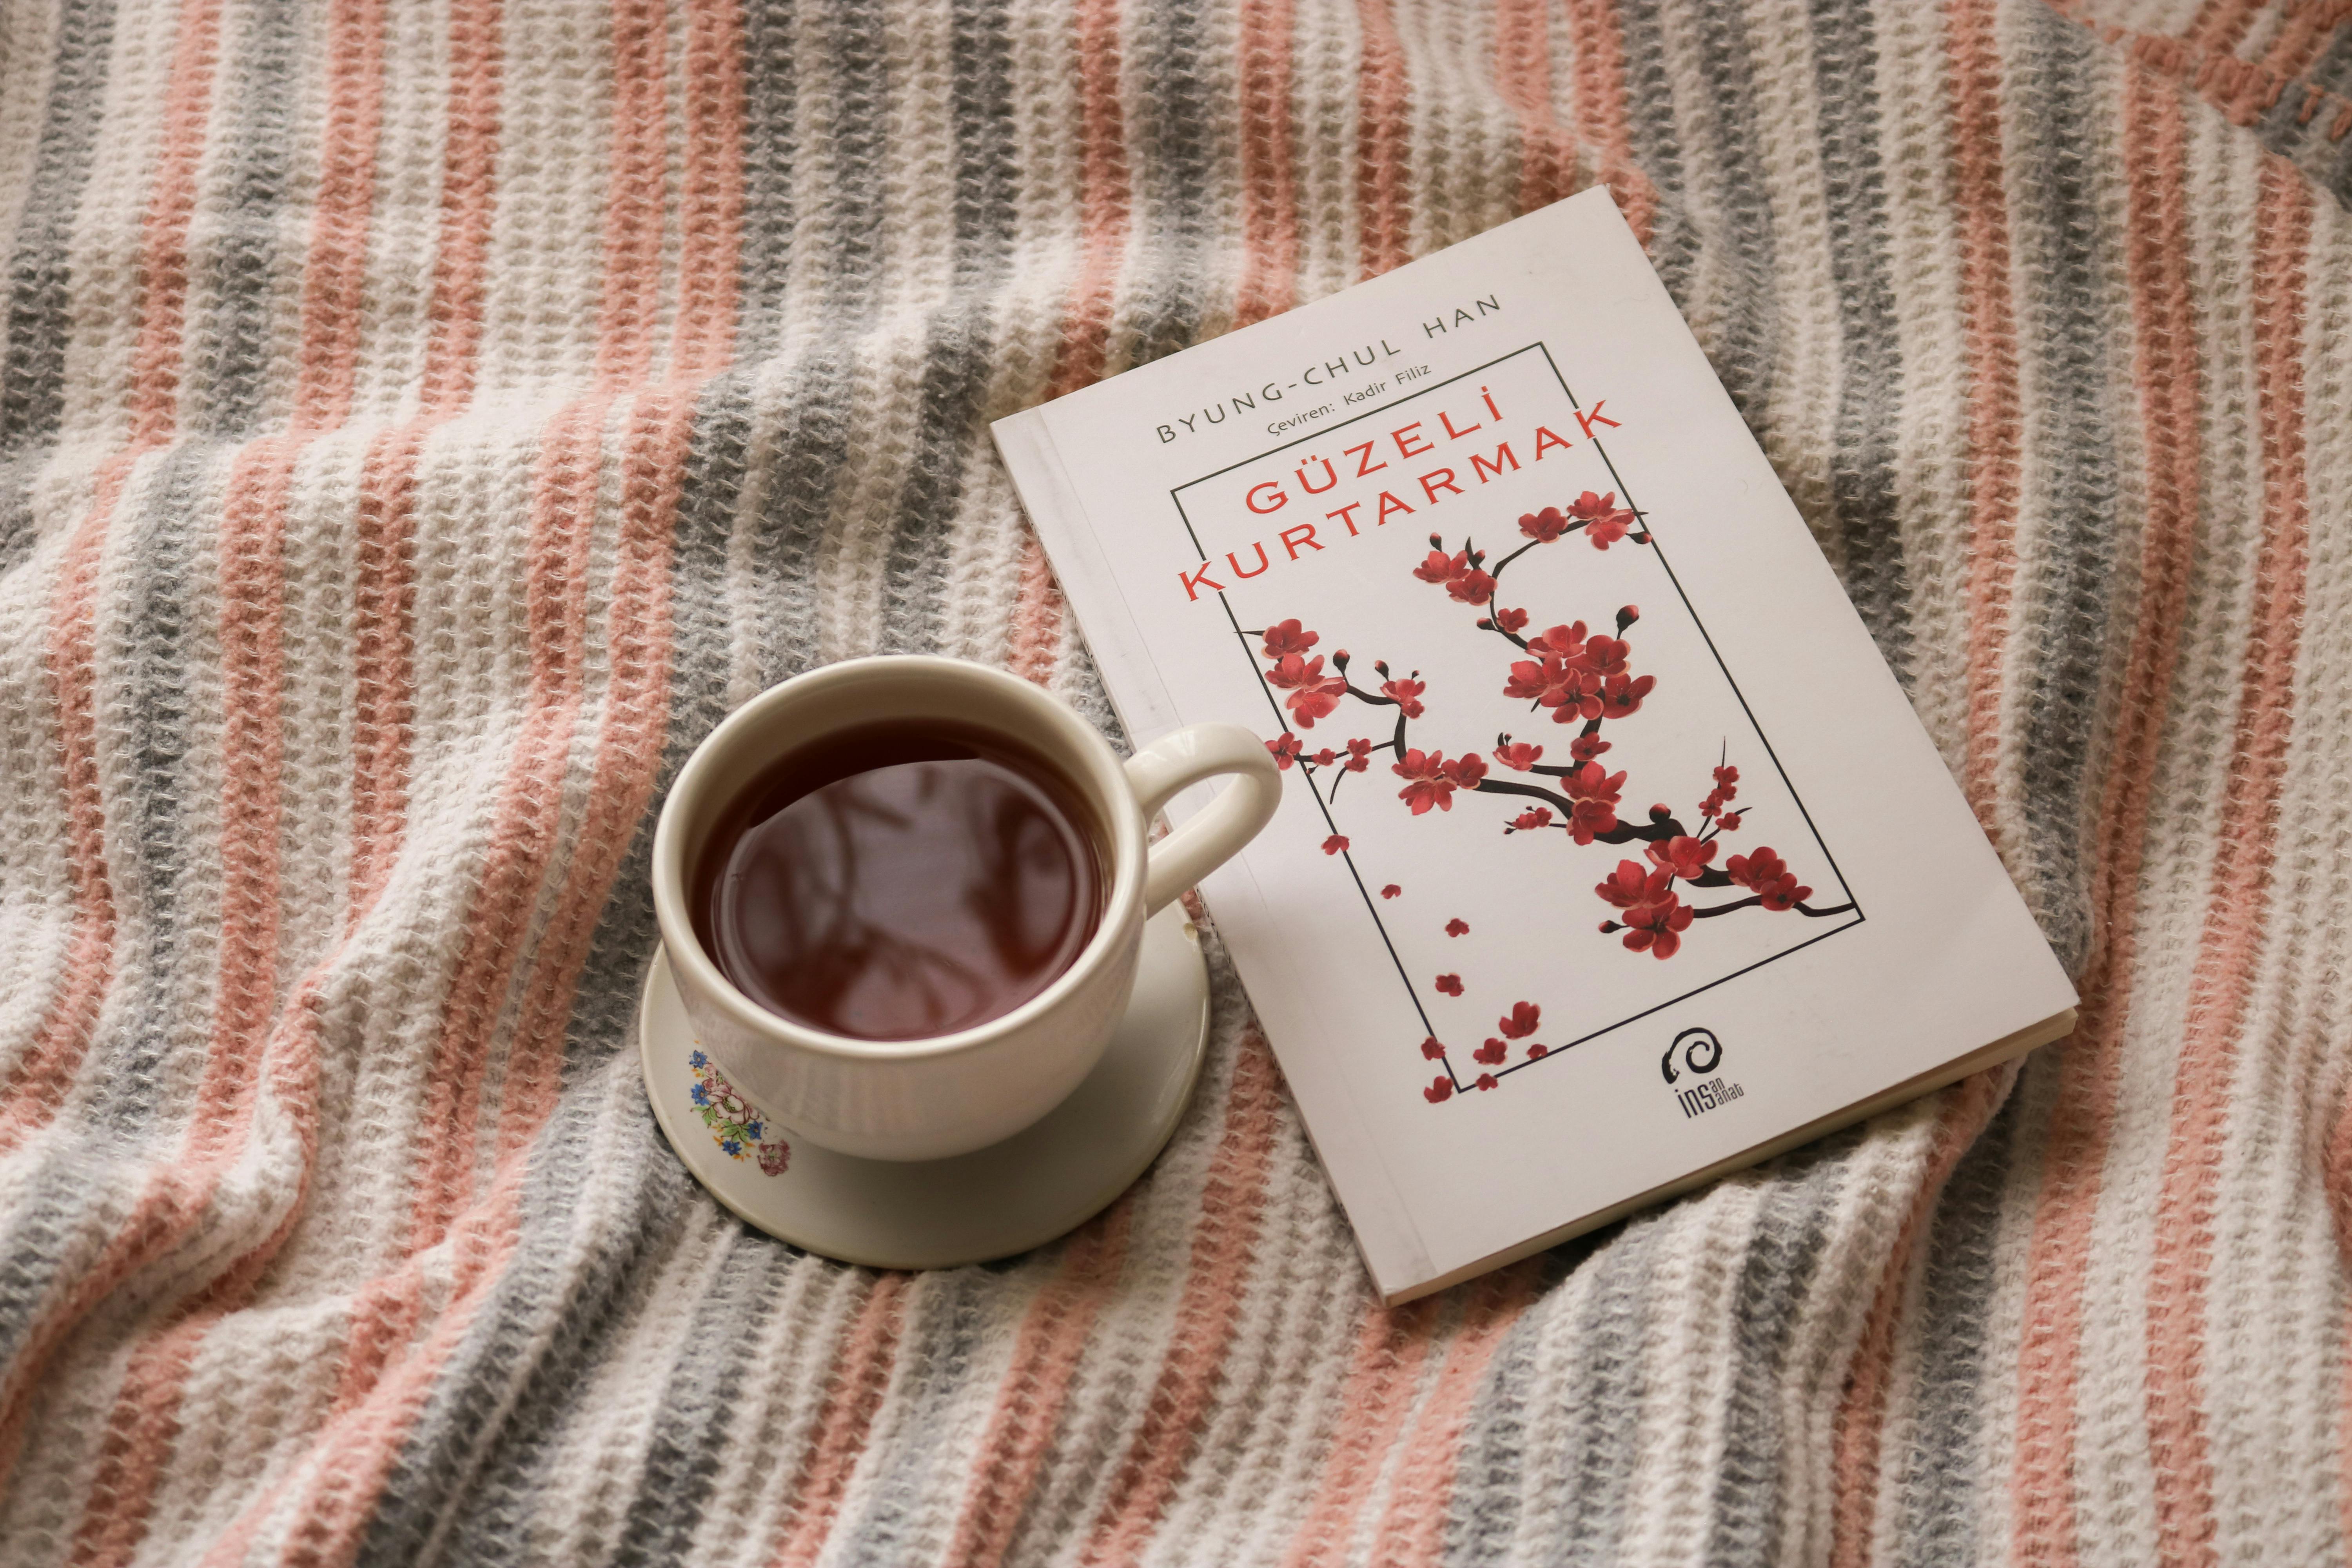 Aesthetic Coffee or Tea Mug on Book Stack | Poster